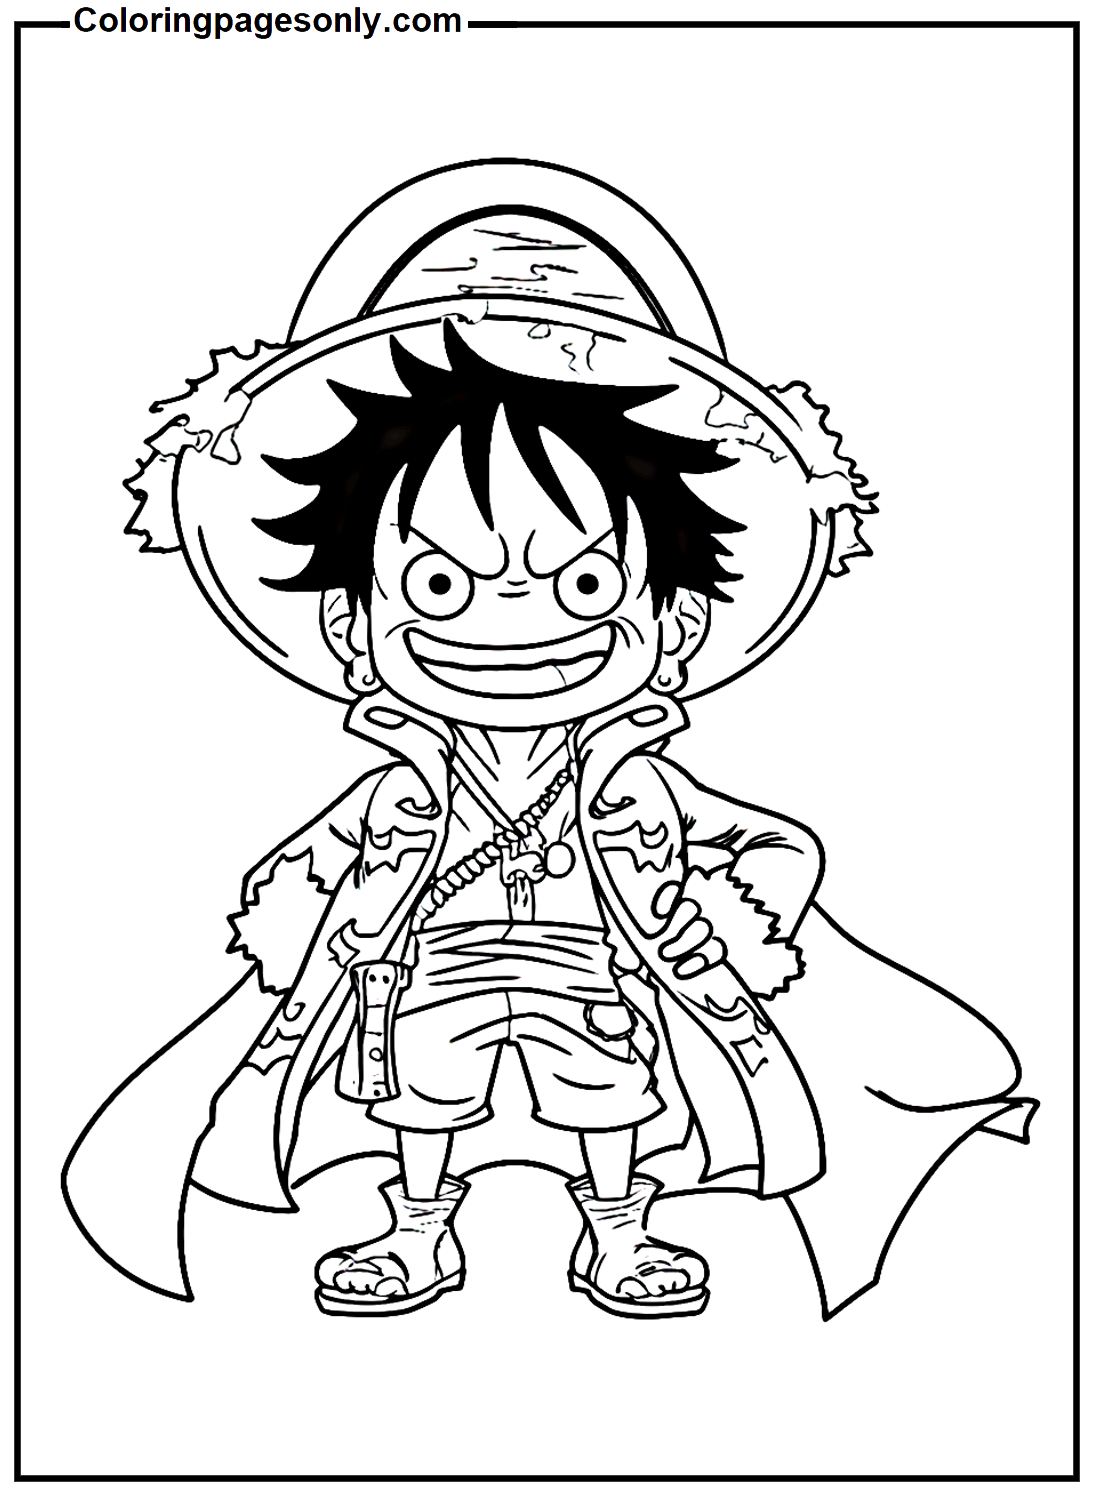 Little Luffy In A Pirate Cloak from Luffy